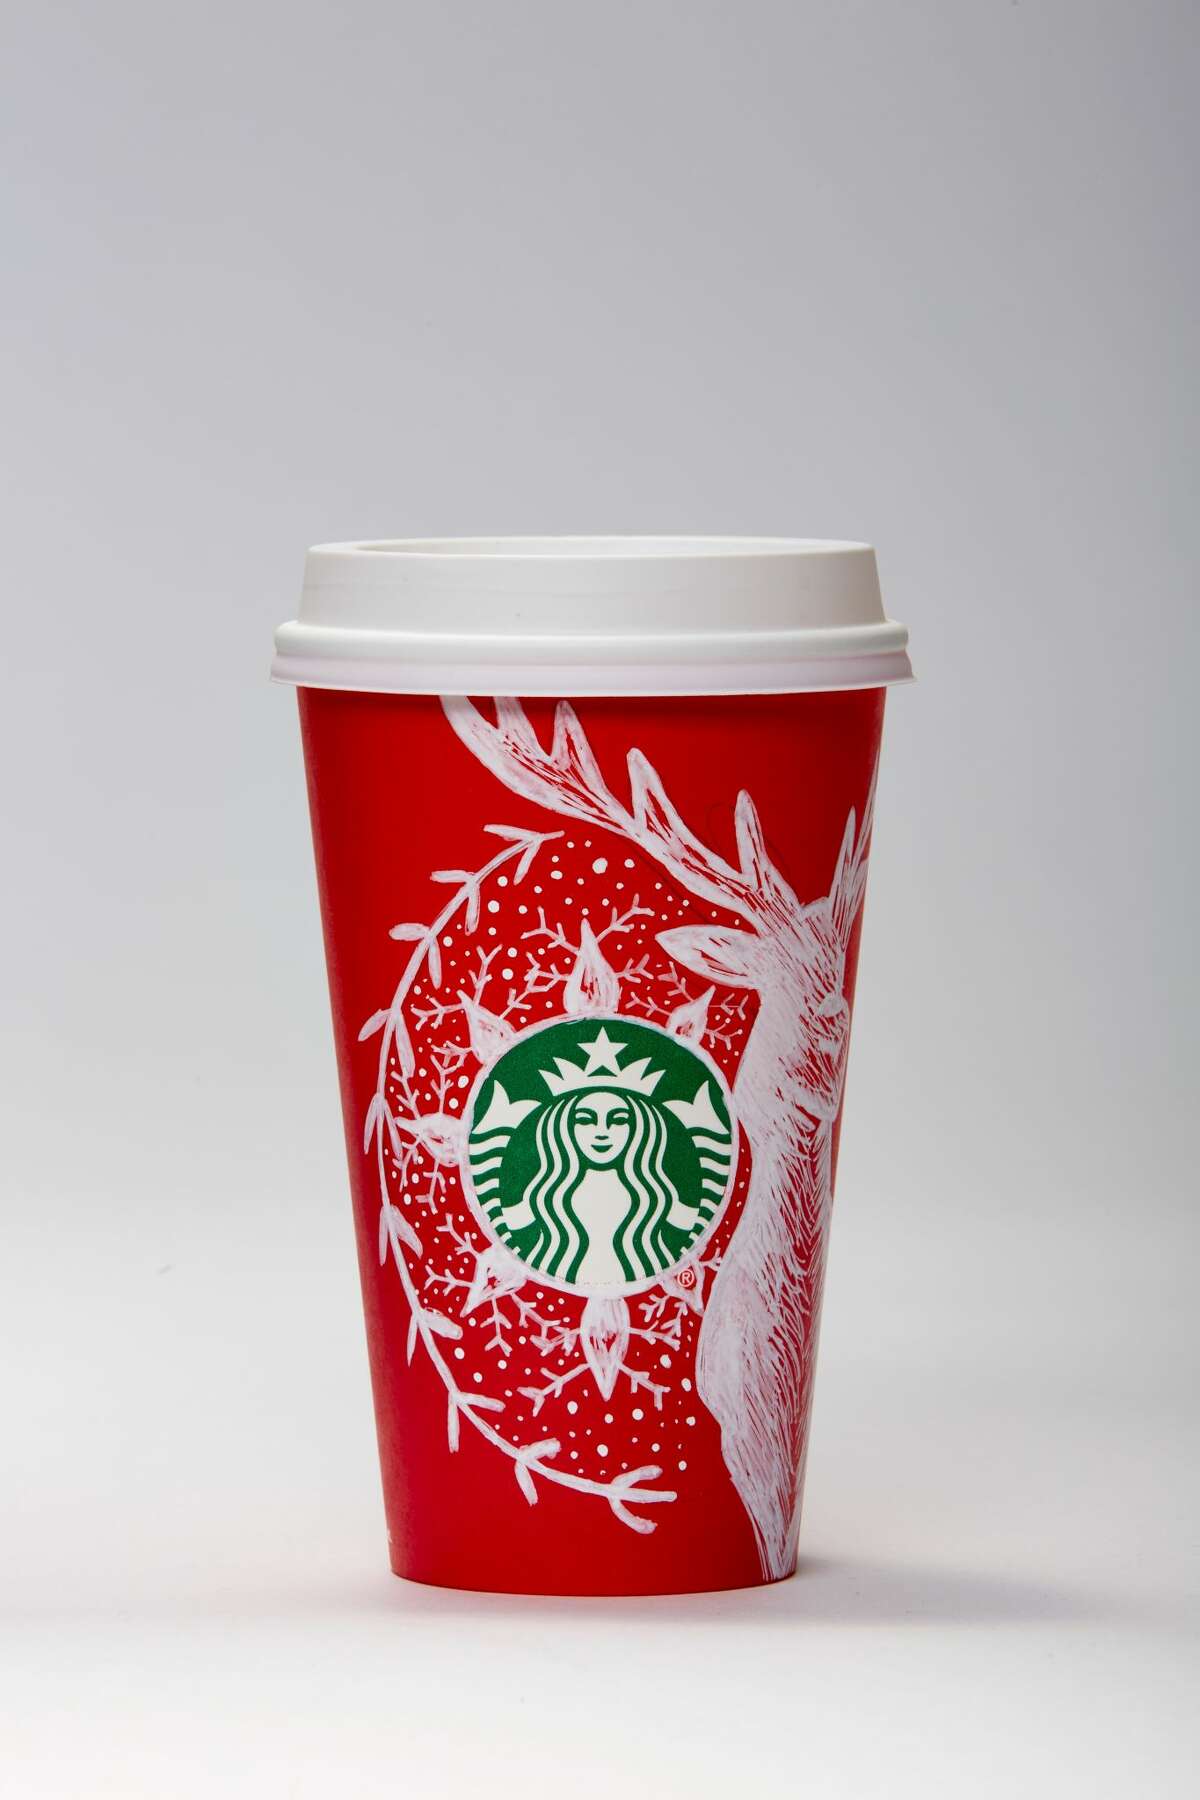 Starbucks Cup Design